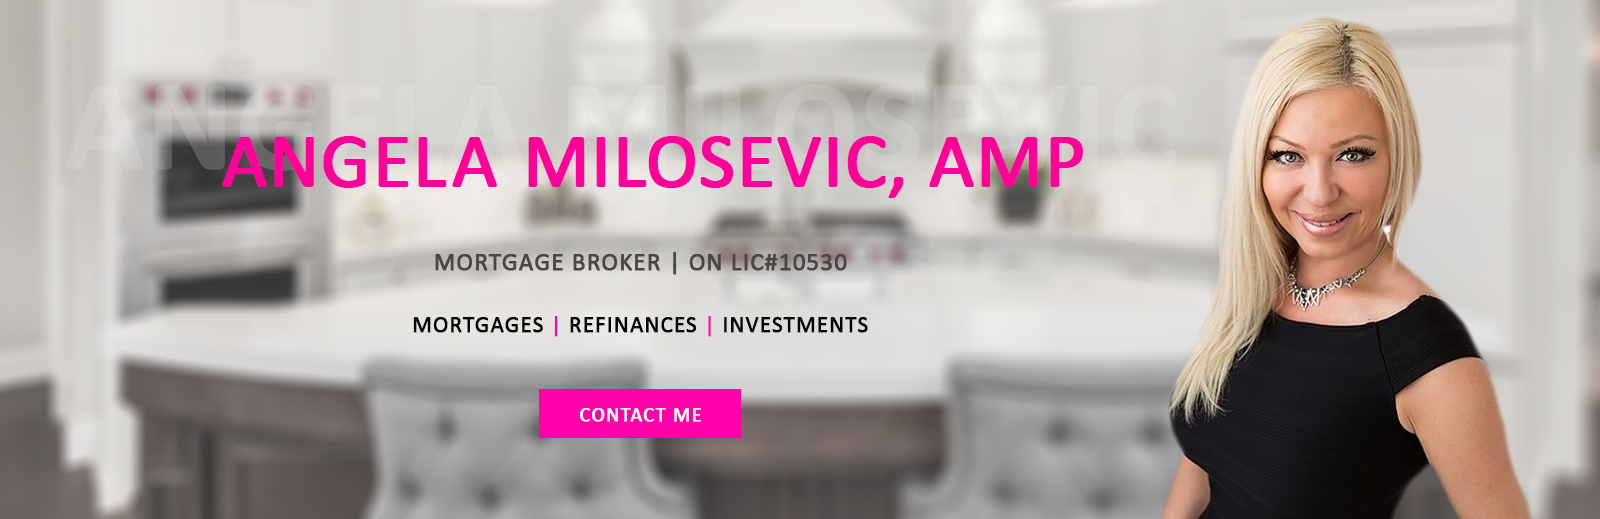 Angela Milosevic - Mortgage Broker